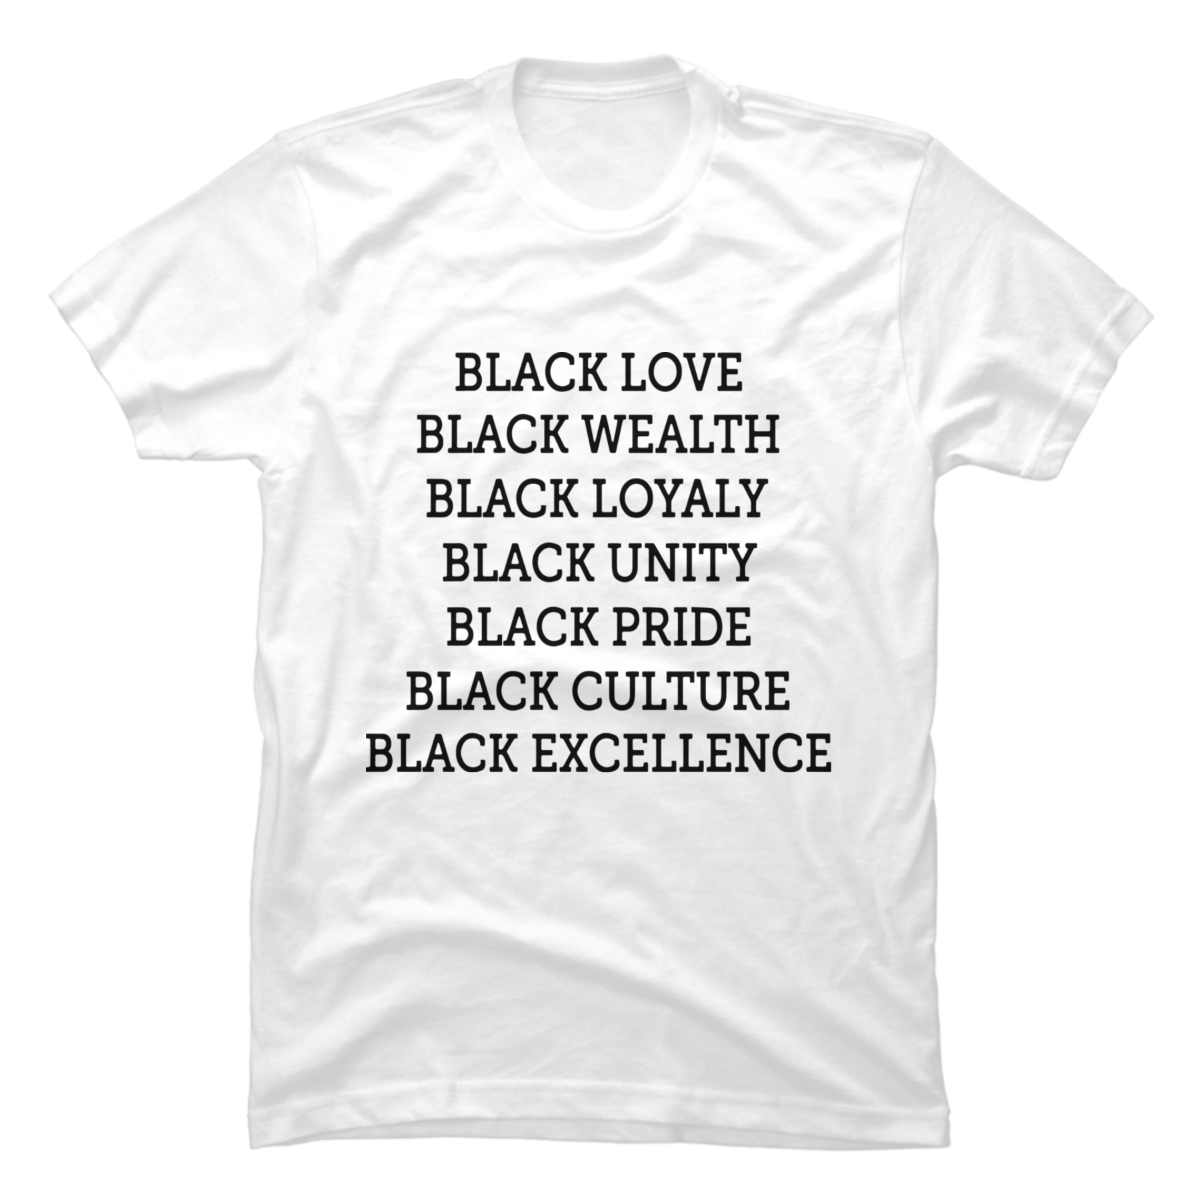 love is love black lives matter shirt